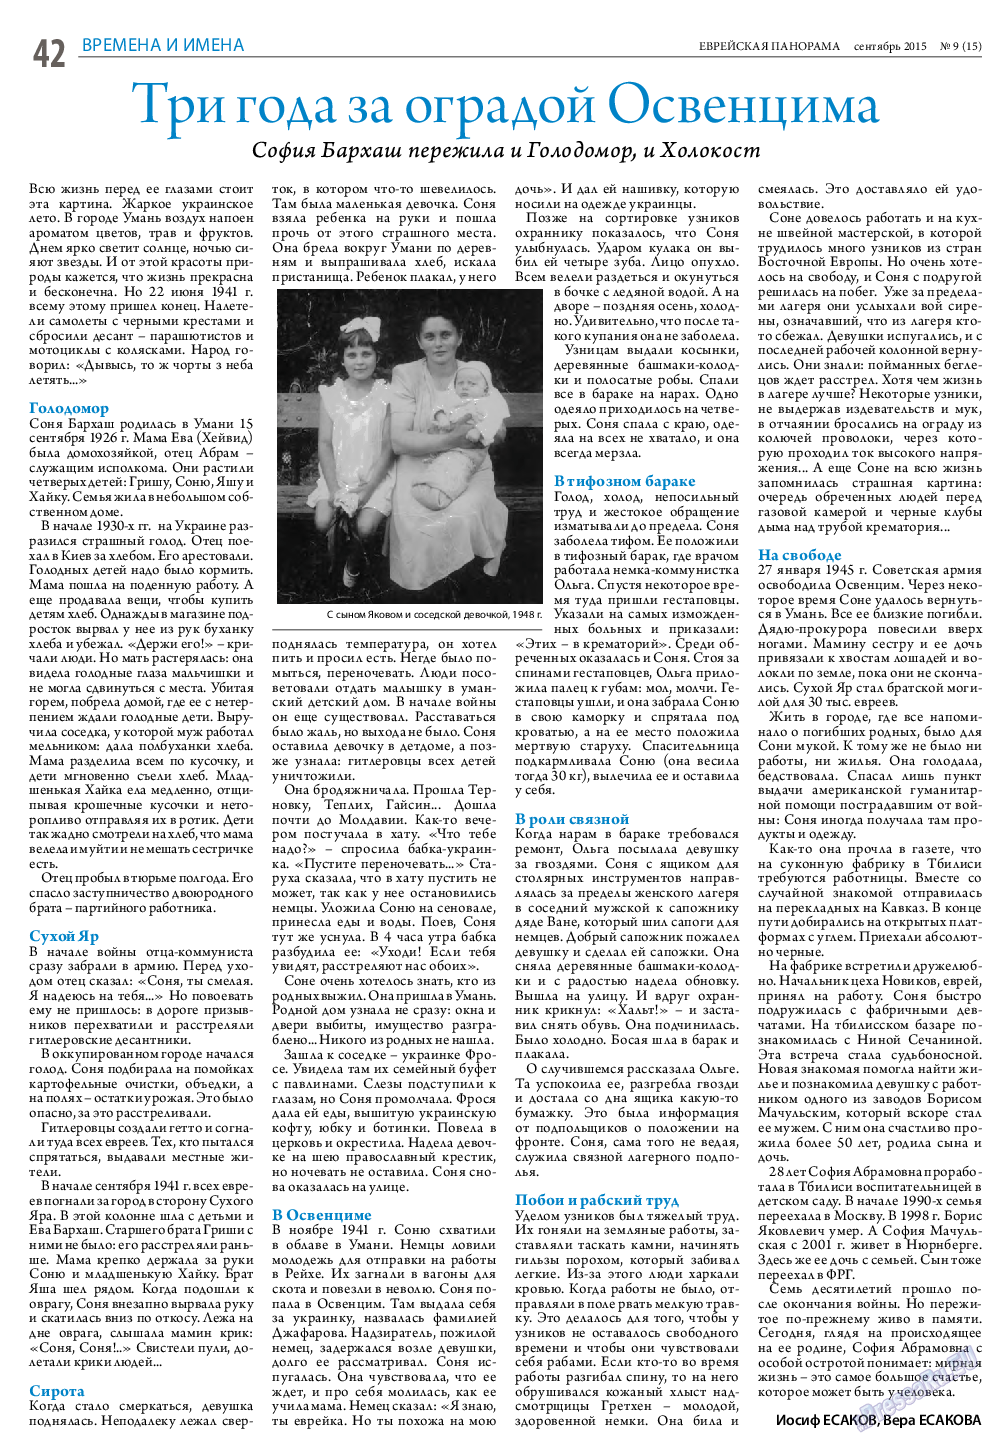 Еврейская панорама, газета. 2015 №9 стр.42